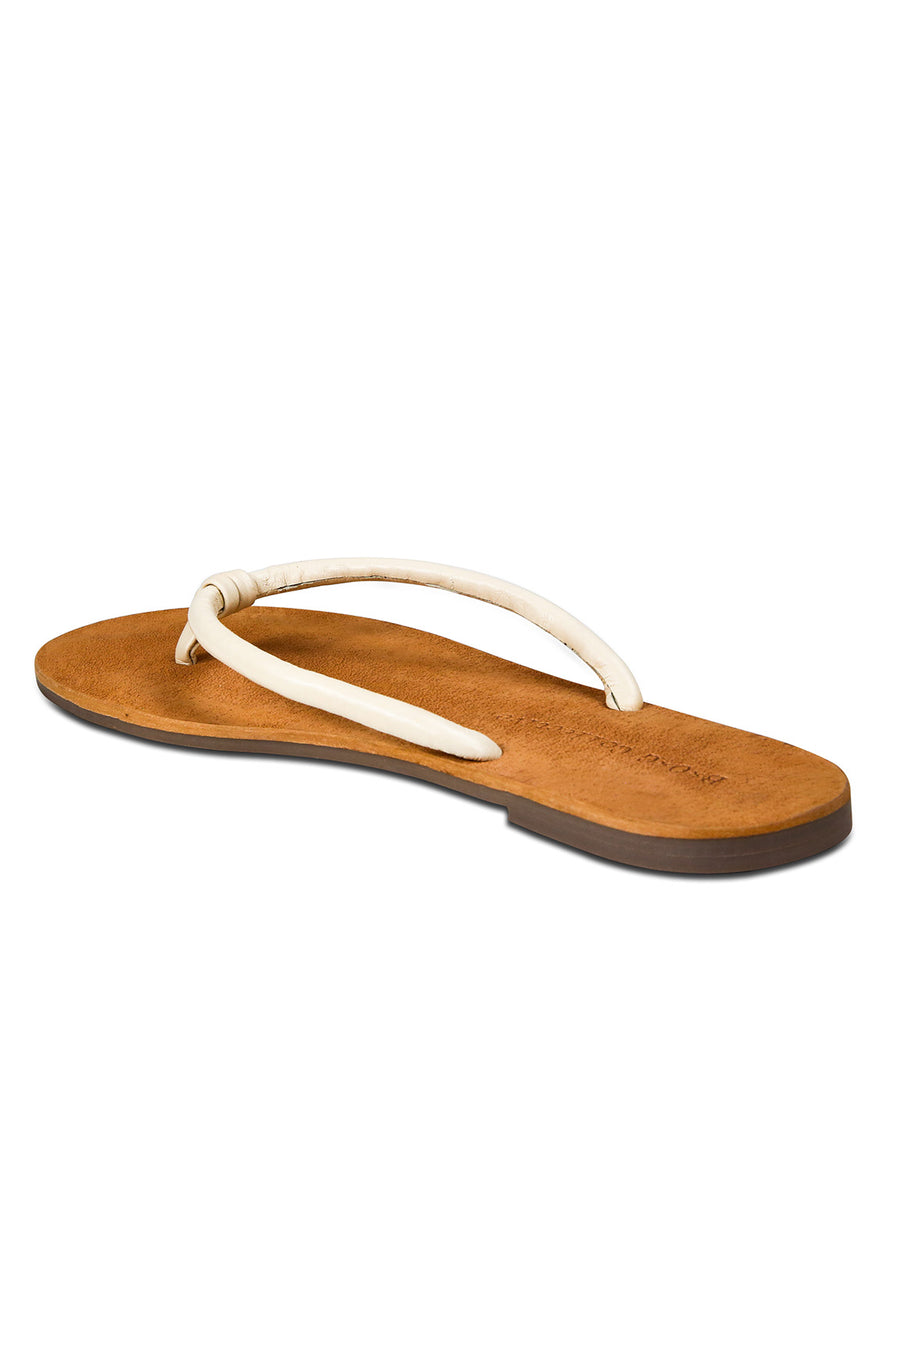 Pipa Ivory Leather Flip Flop Sandal Master